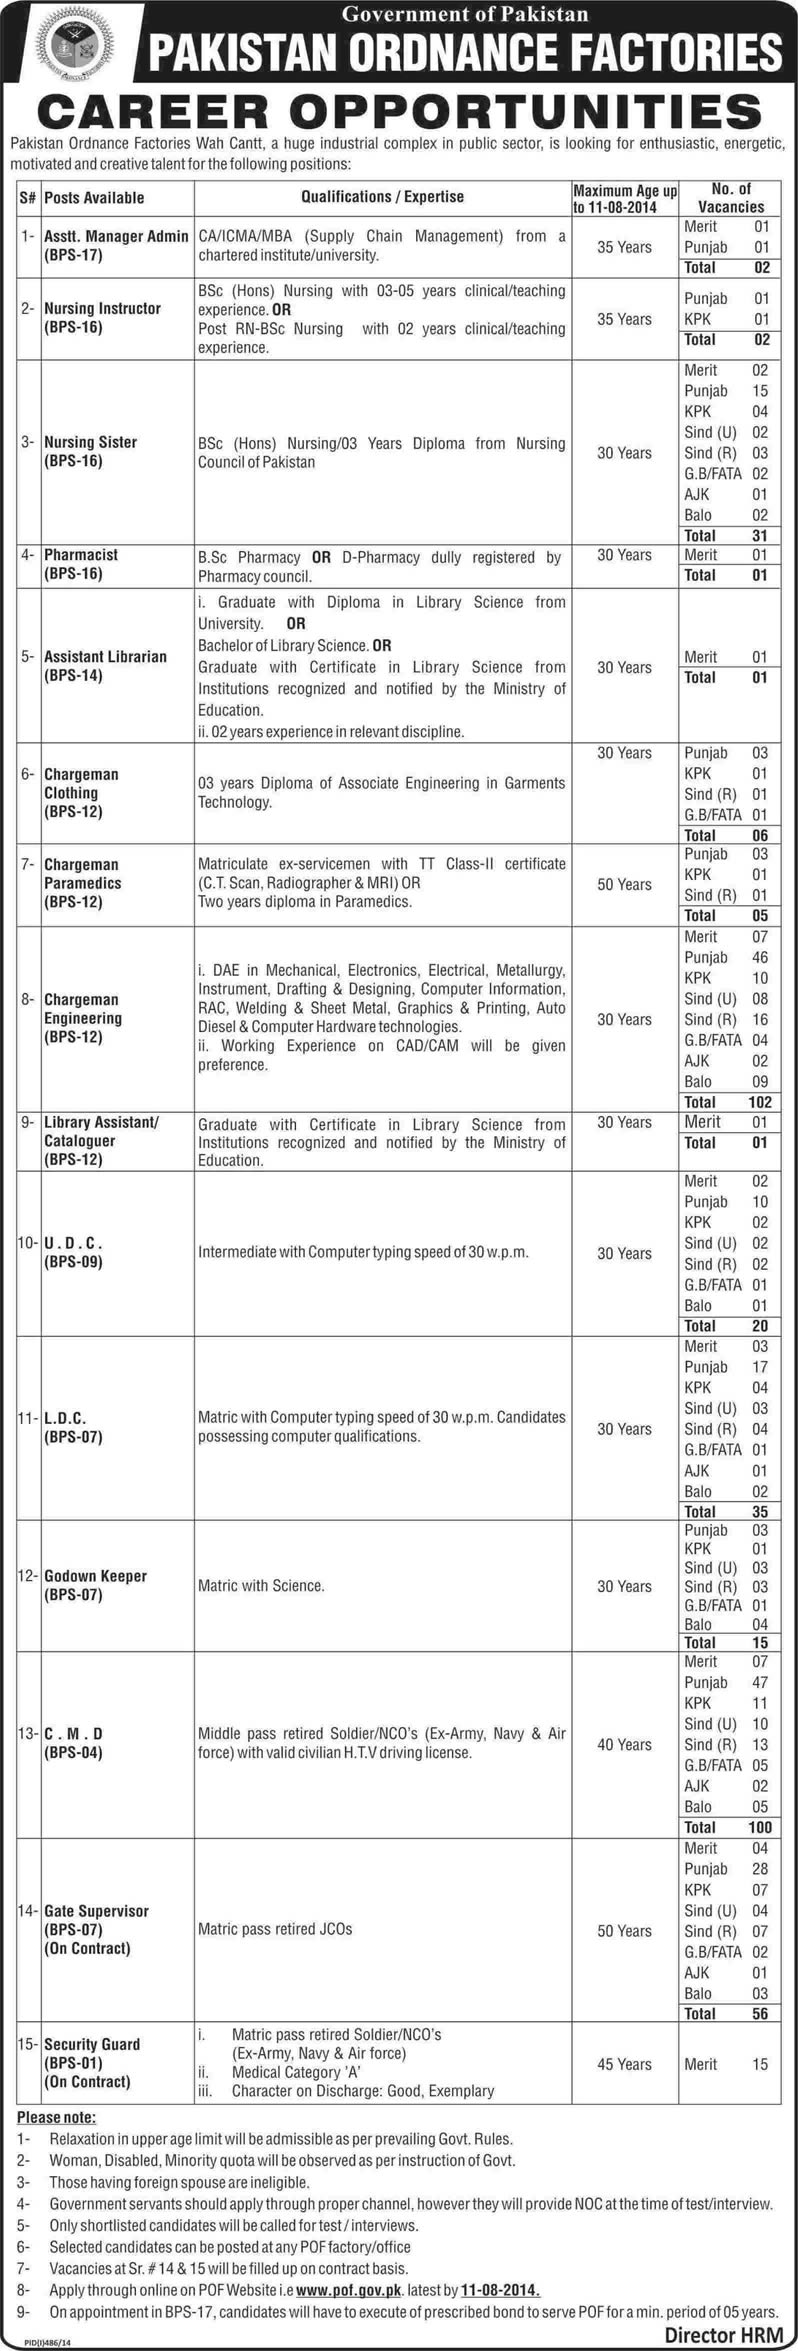 Pakistan Ordnance Factories Wah Cantt Jobs 2014 July / August Online Application Form